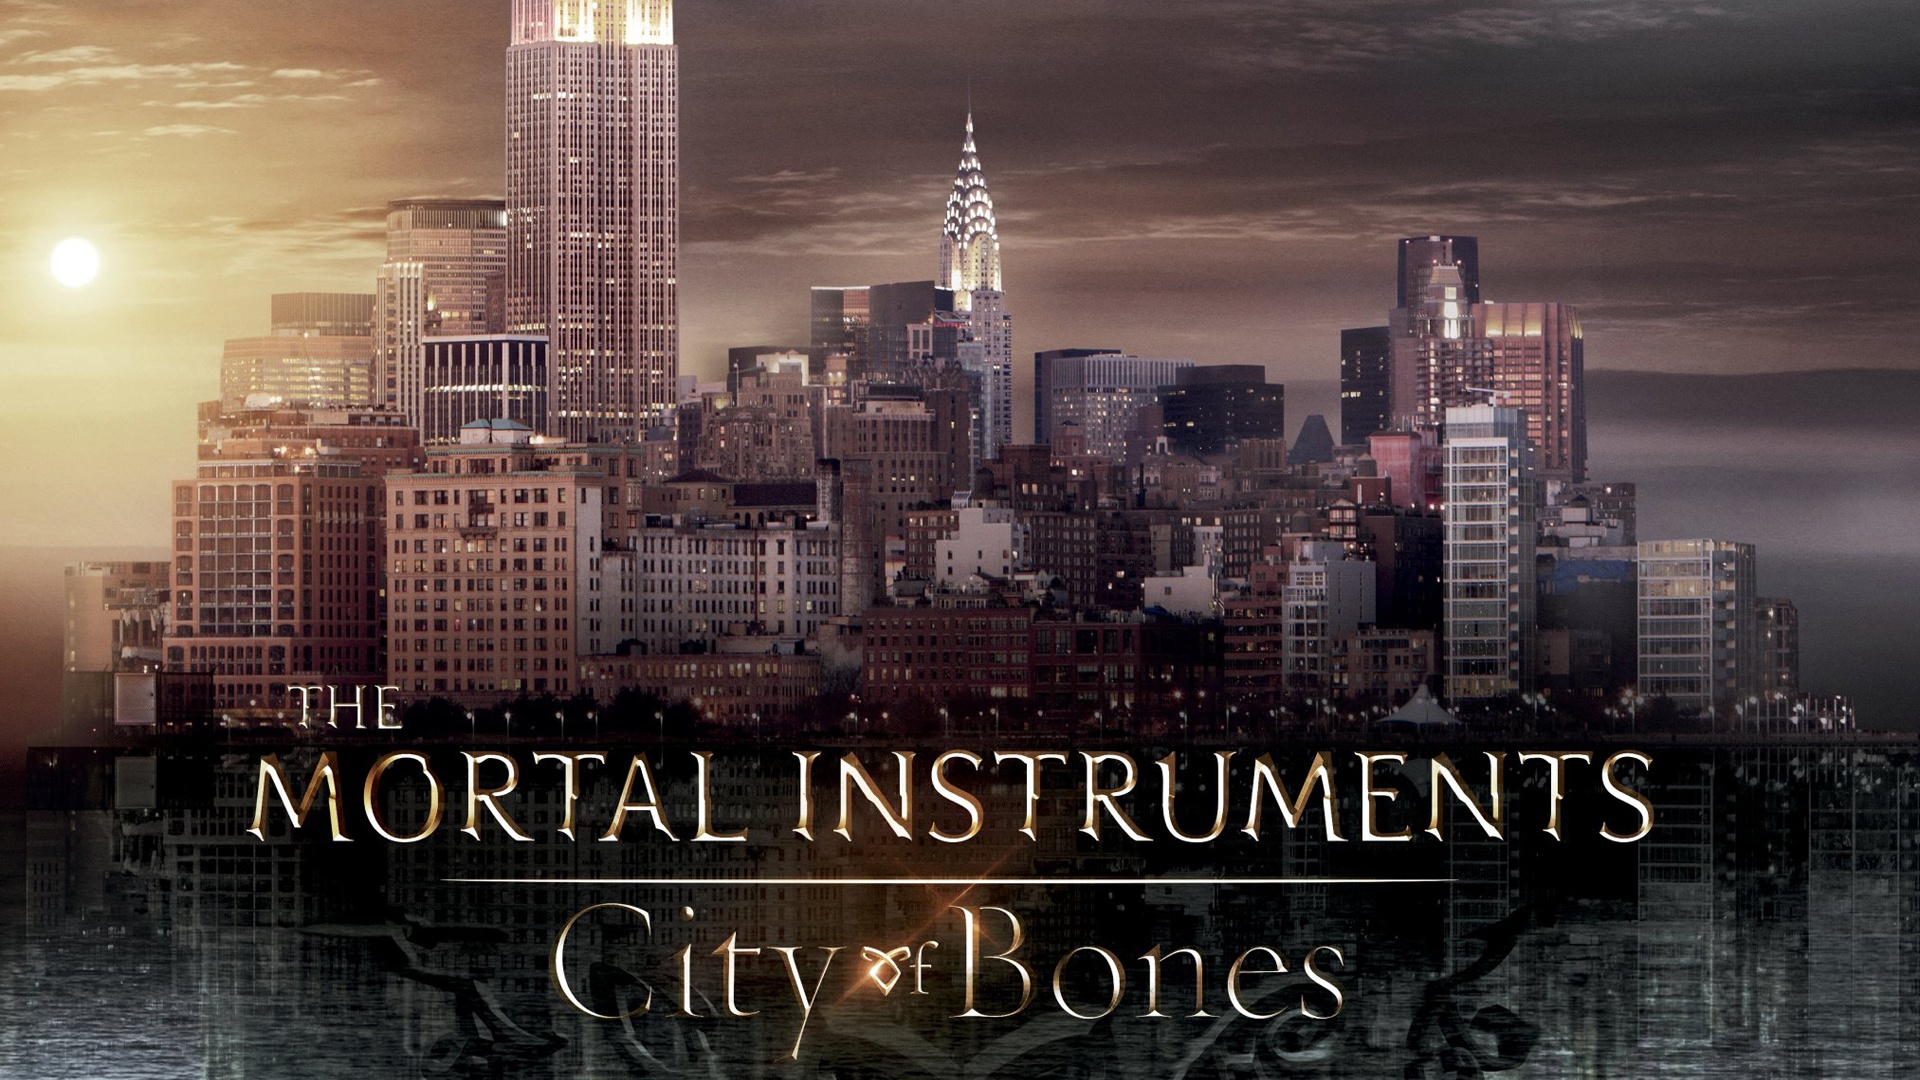 Books The Mortal Instruments City Of Bones Movie Stills Released